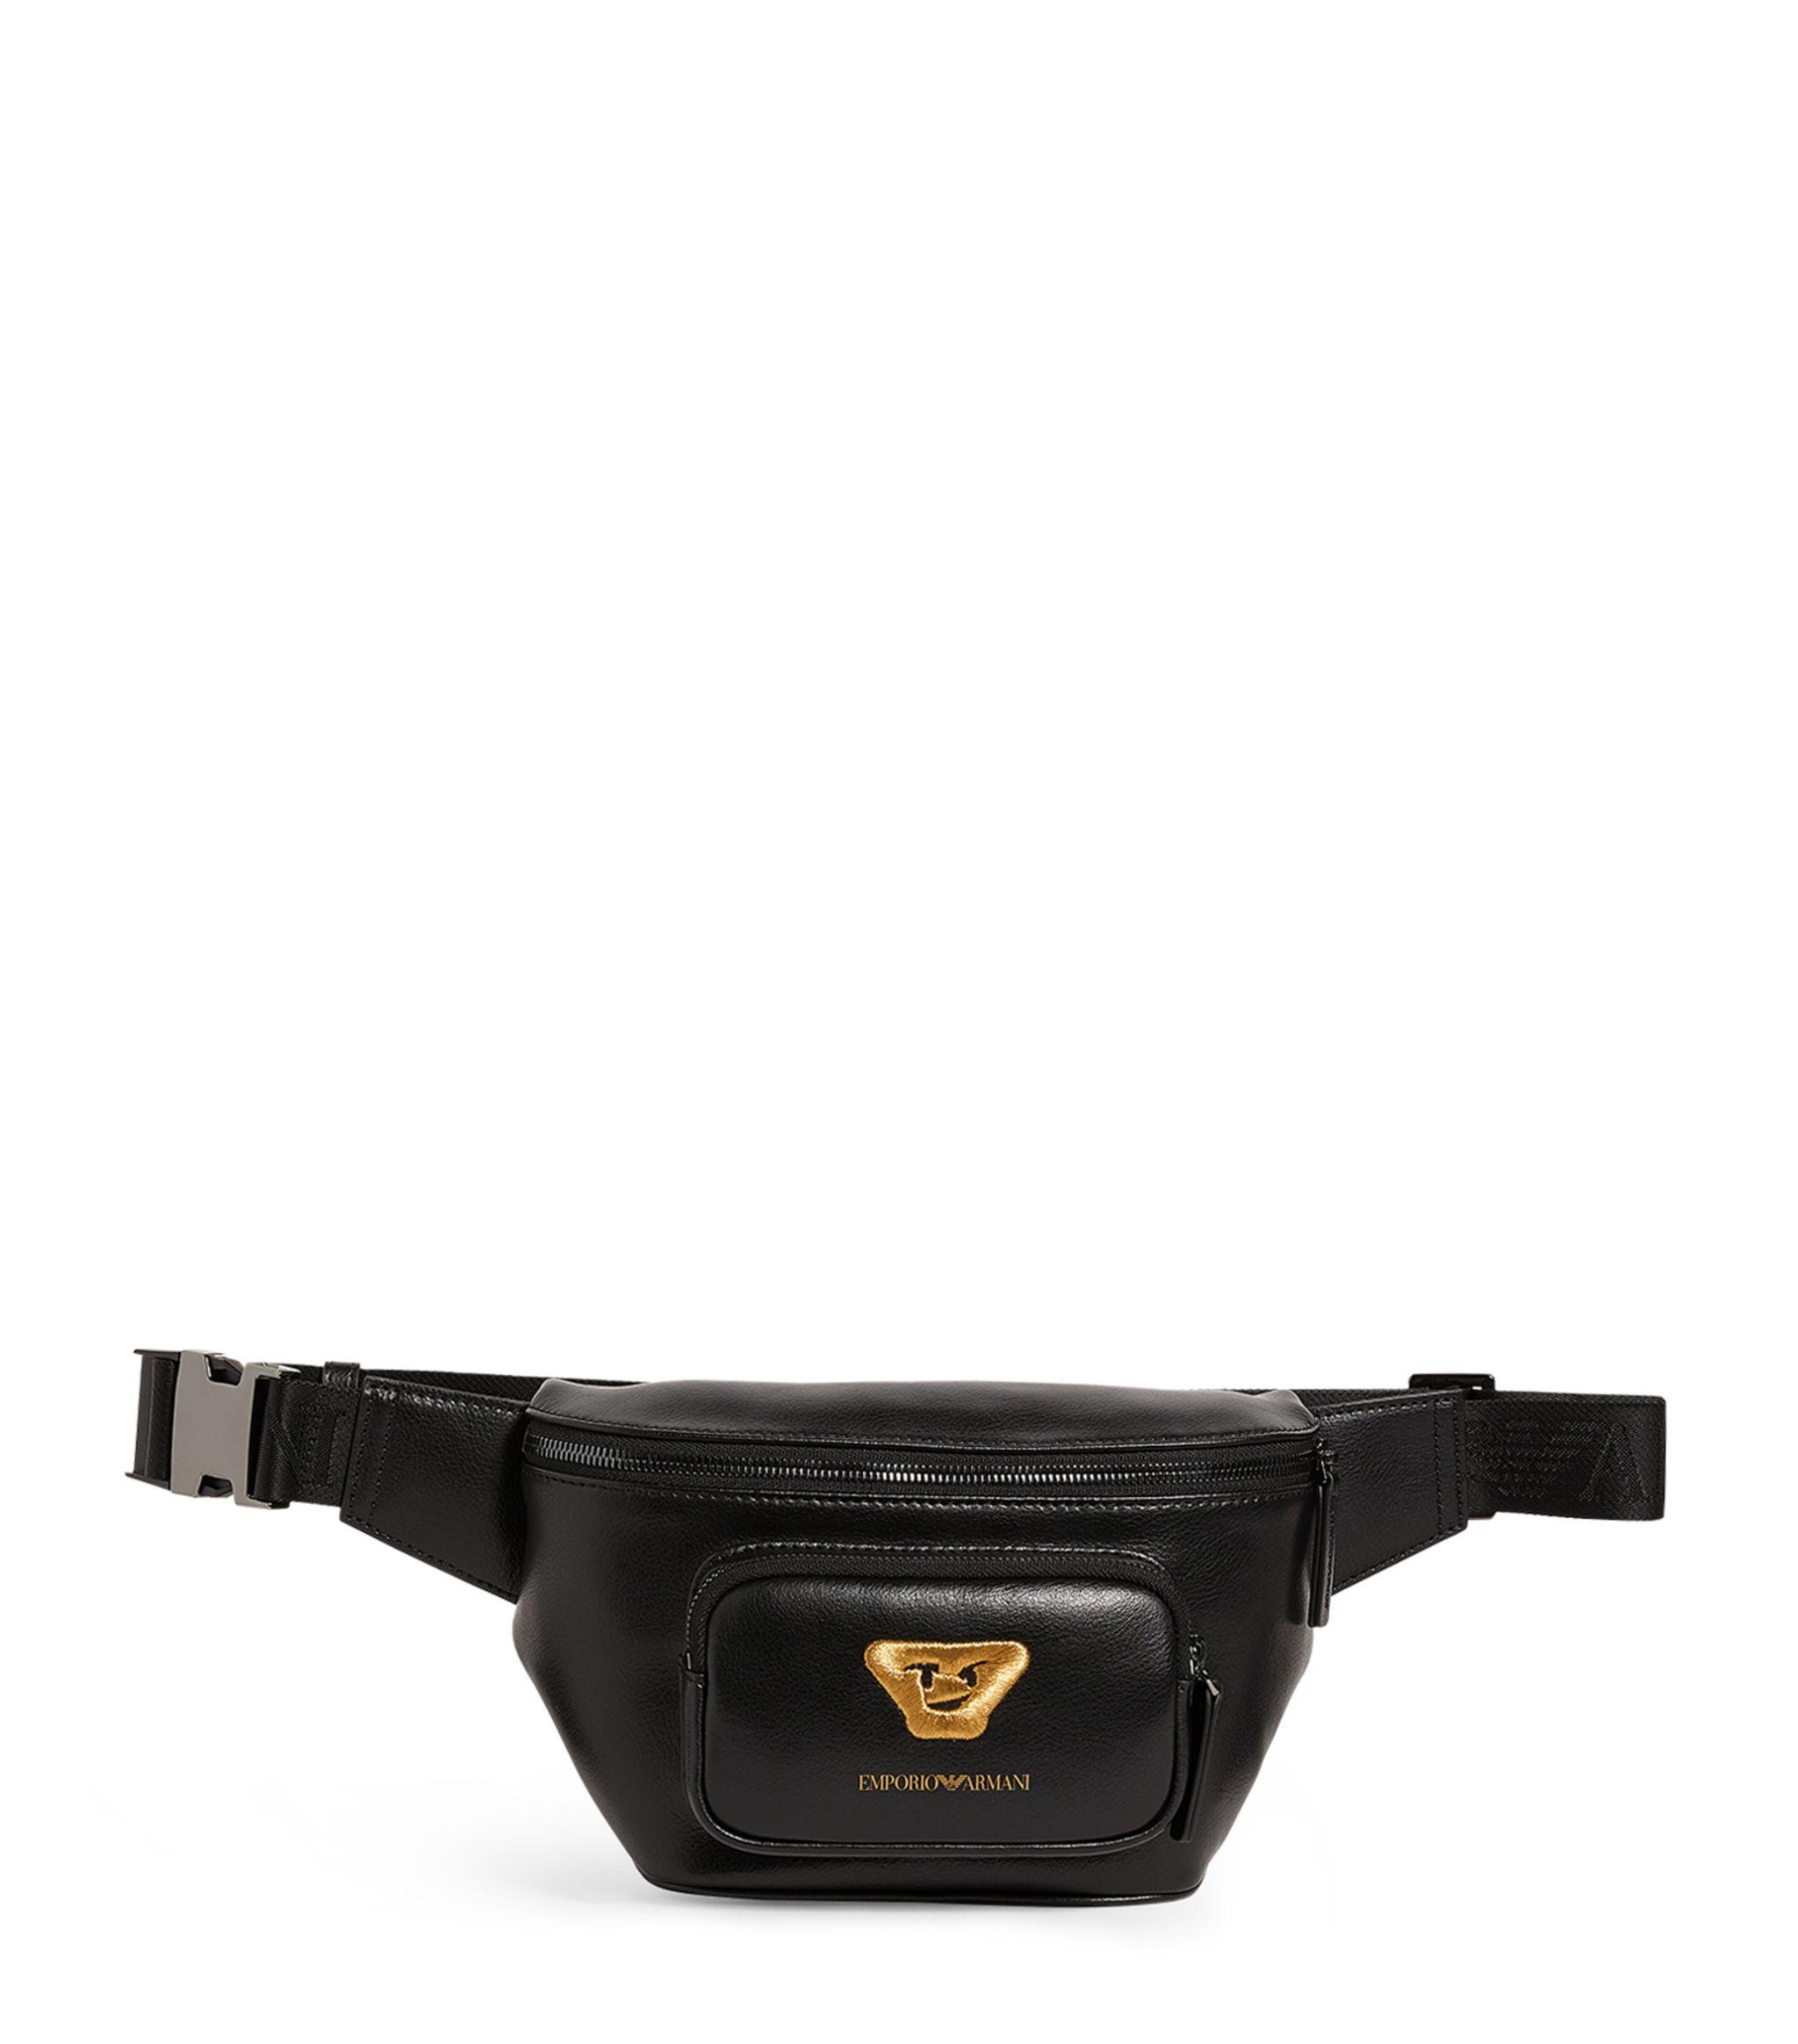 Emporio Armani Embroidered Emoji Leather Belt Bag in Black for Men - Lyst